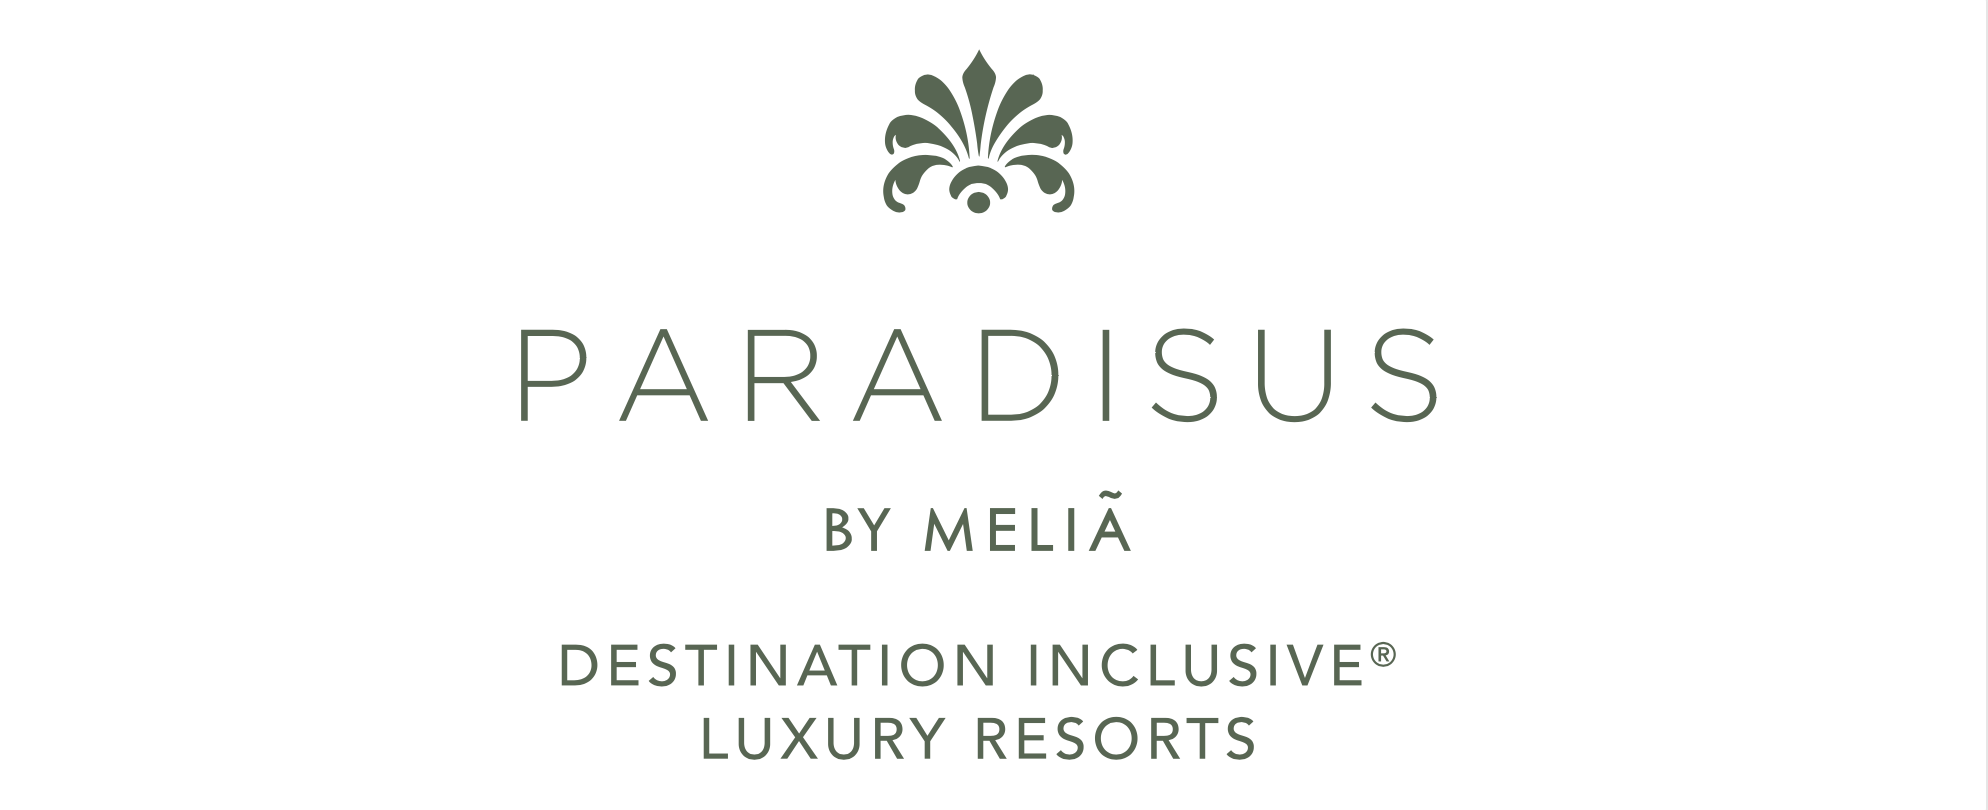 destination all inclusive luxury resort, paradisus by melia 